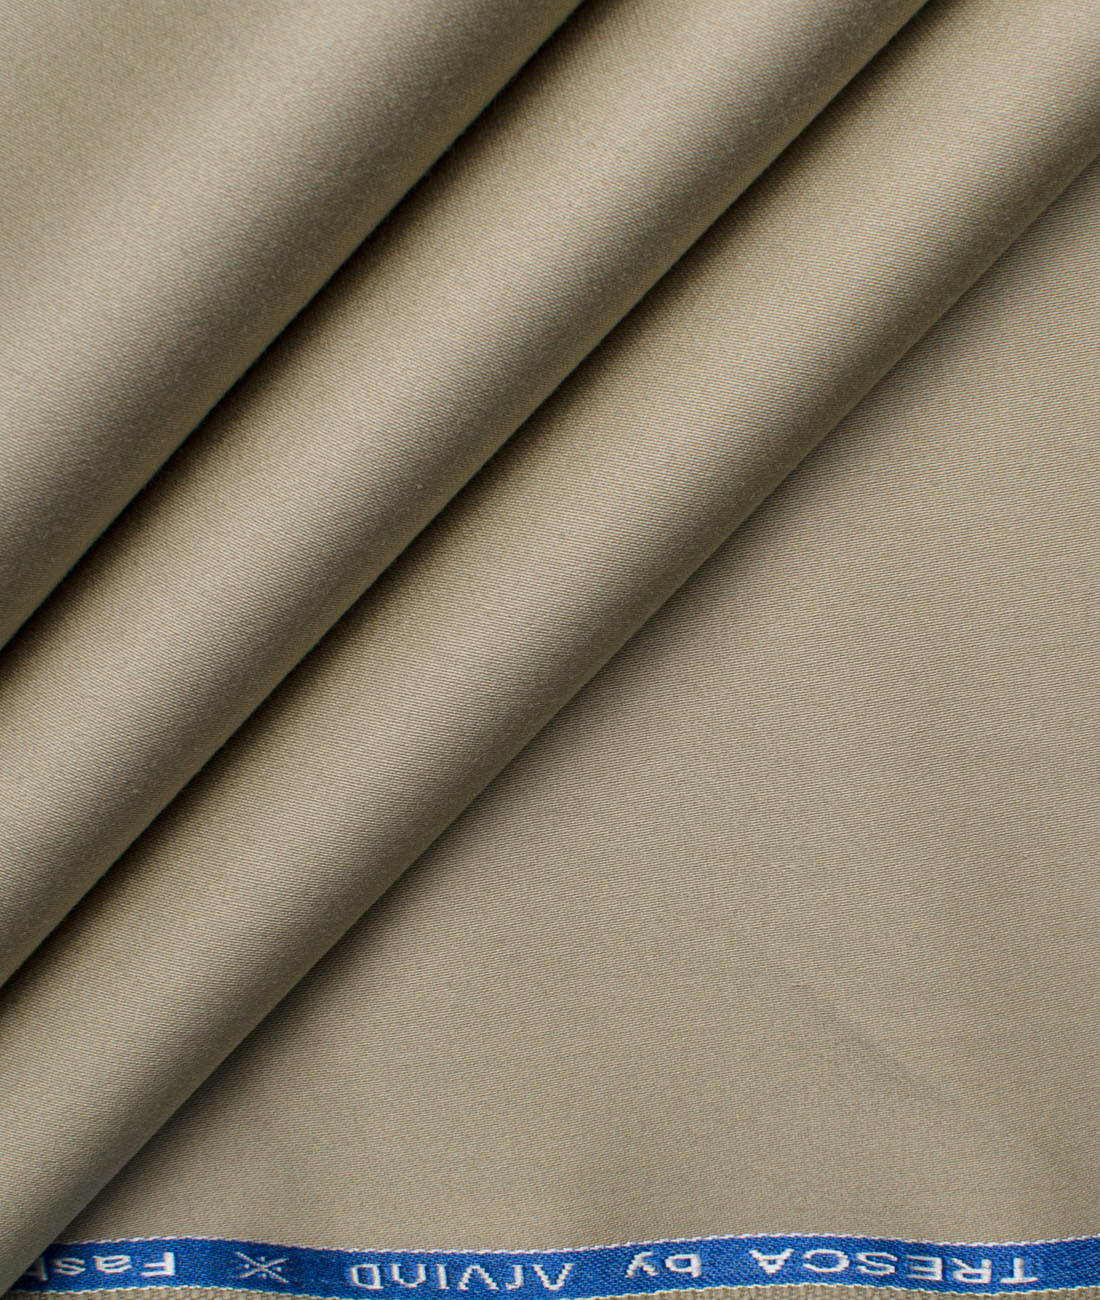 Cotton Trouser Fabric Buy Cotton trouser fabric in Jakarta Indonesia from  ATS Fabric Ltd